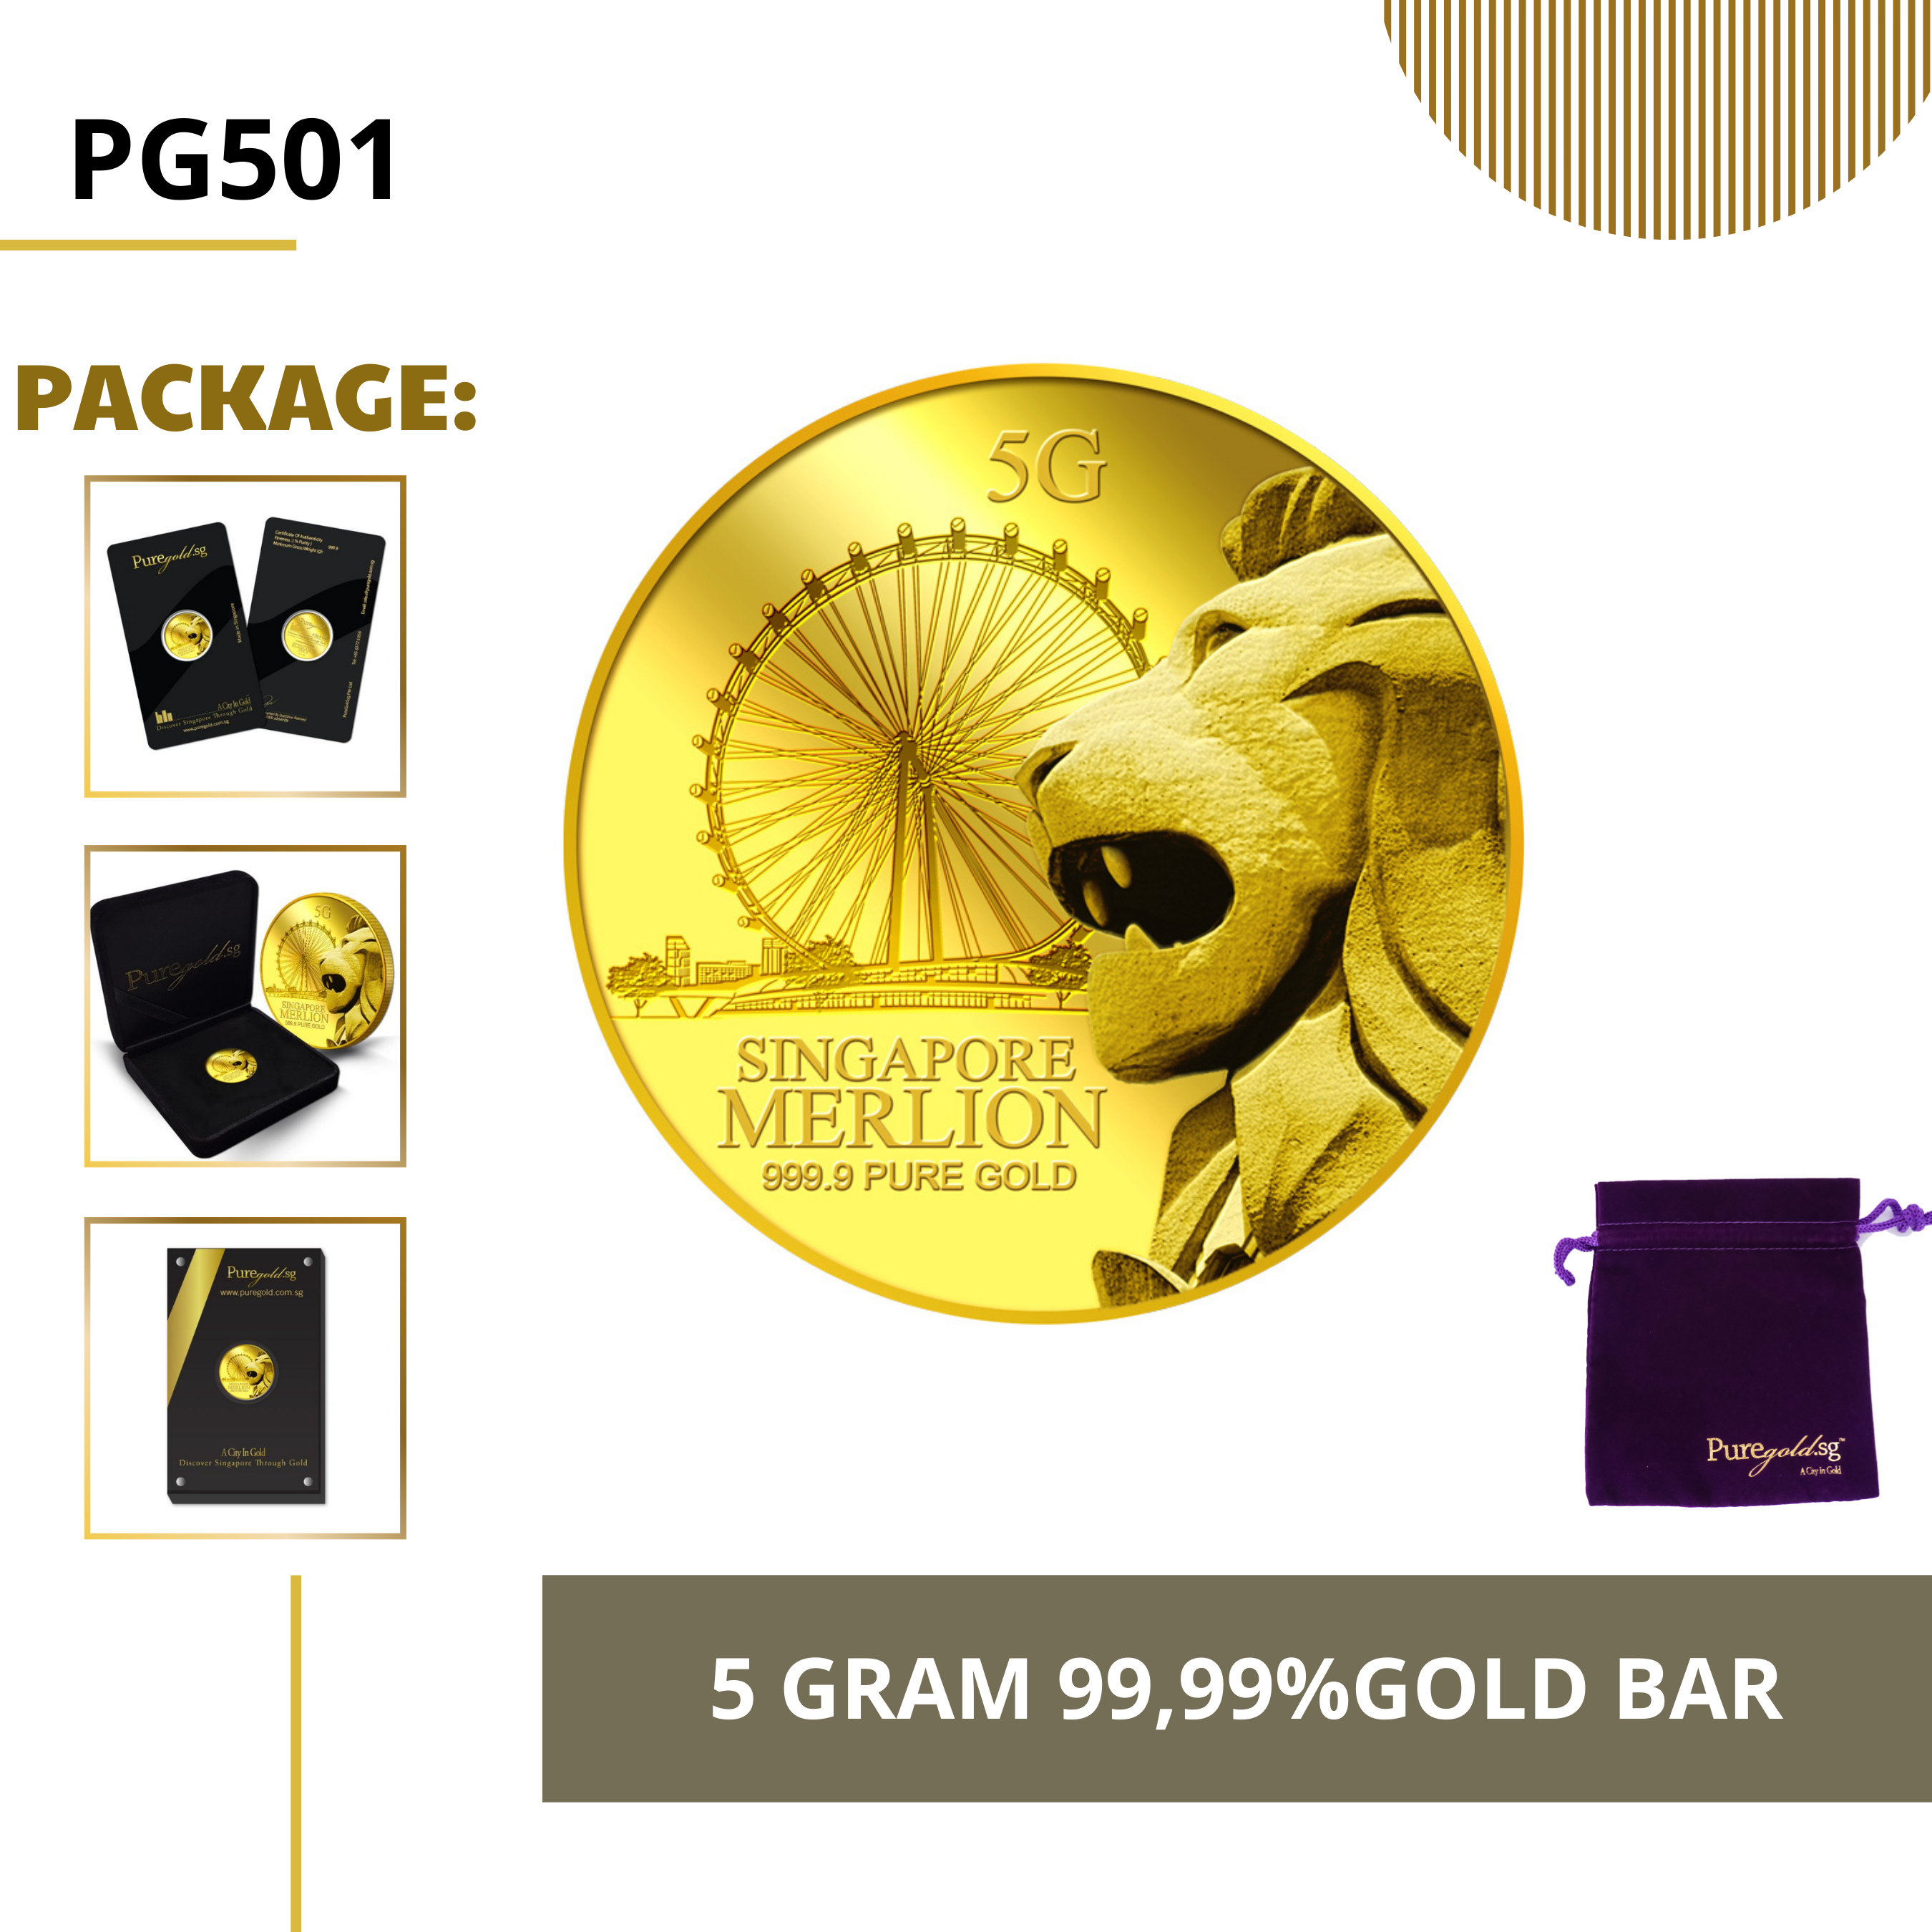 PURE GOLD 99.99% ทองคำแท่ง / 5Gram Merlion Flyer gold bar/ ทองคำแท้จากสิงคโปร์ / ทองคำ 5 กรัม / ทอง 99.99% *การันตีทองแท้*